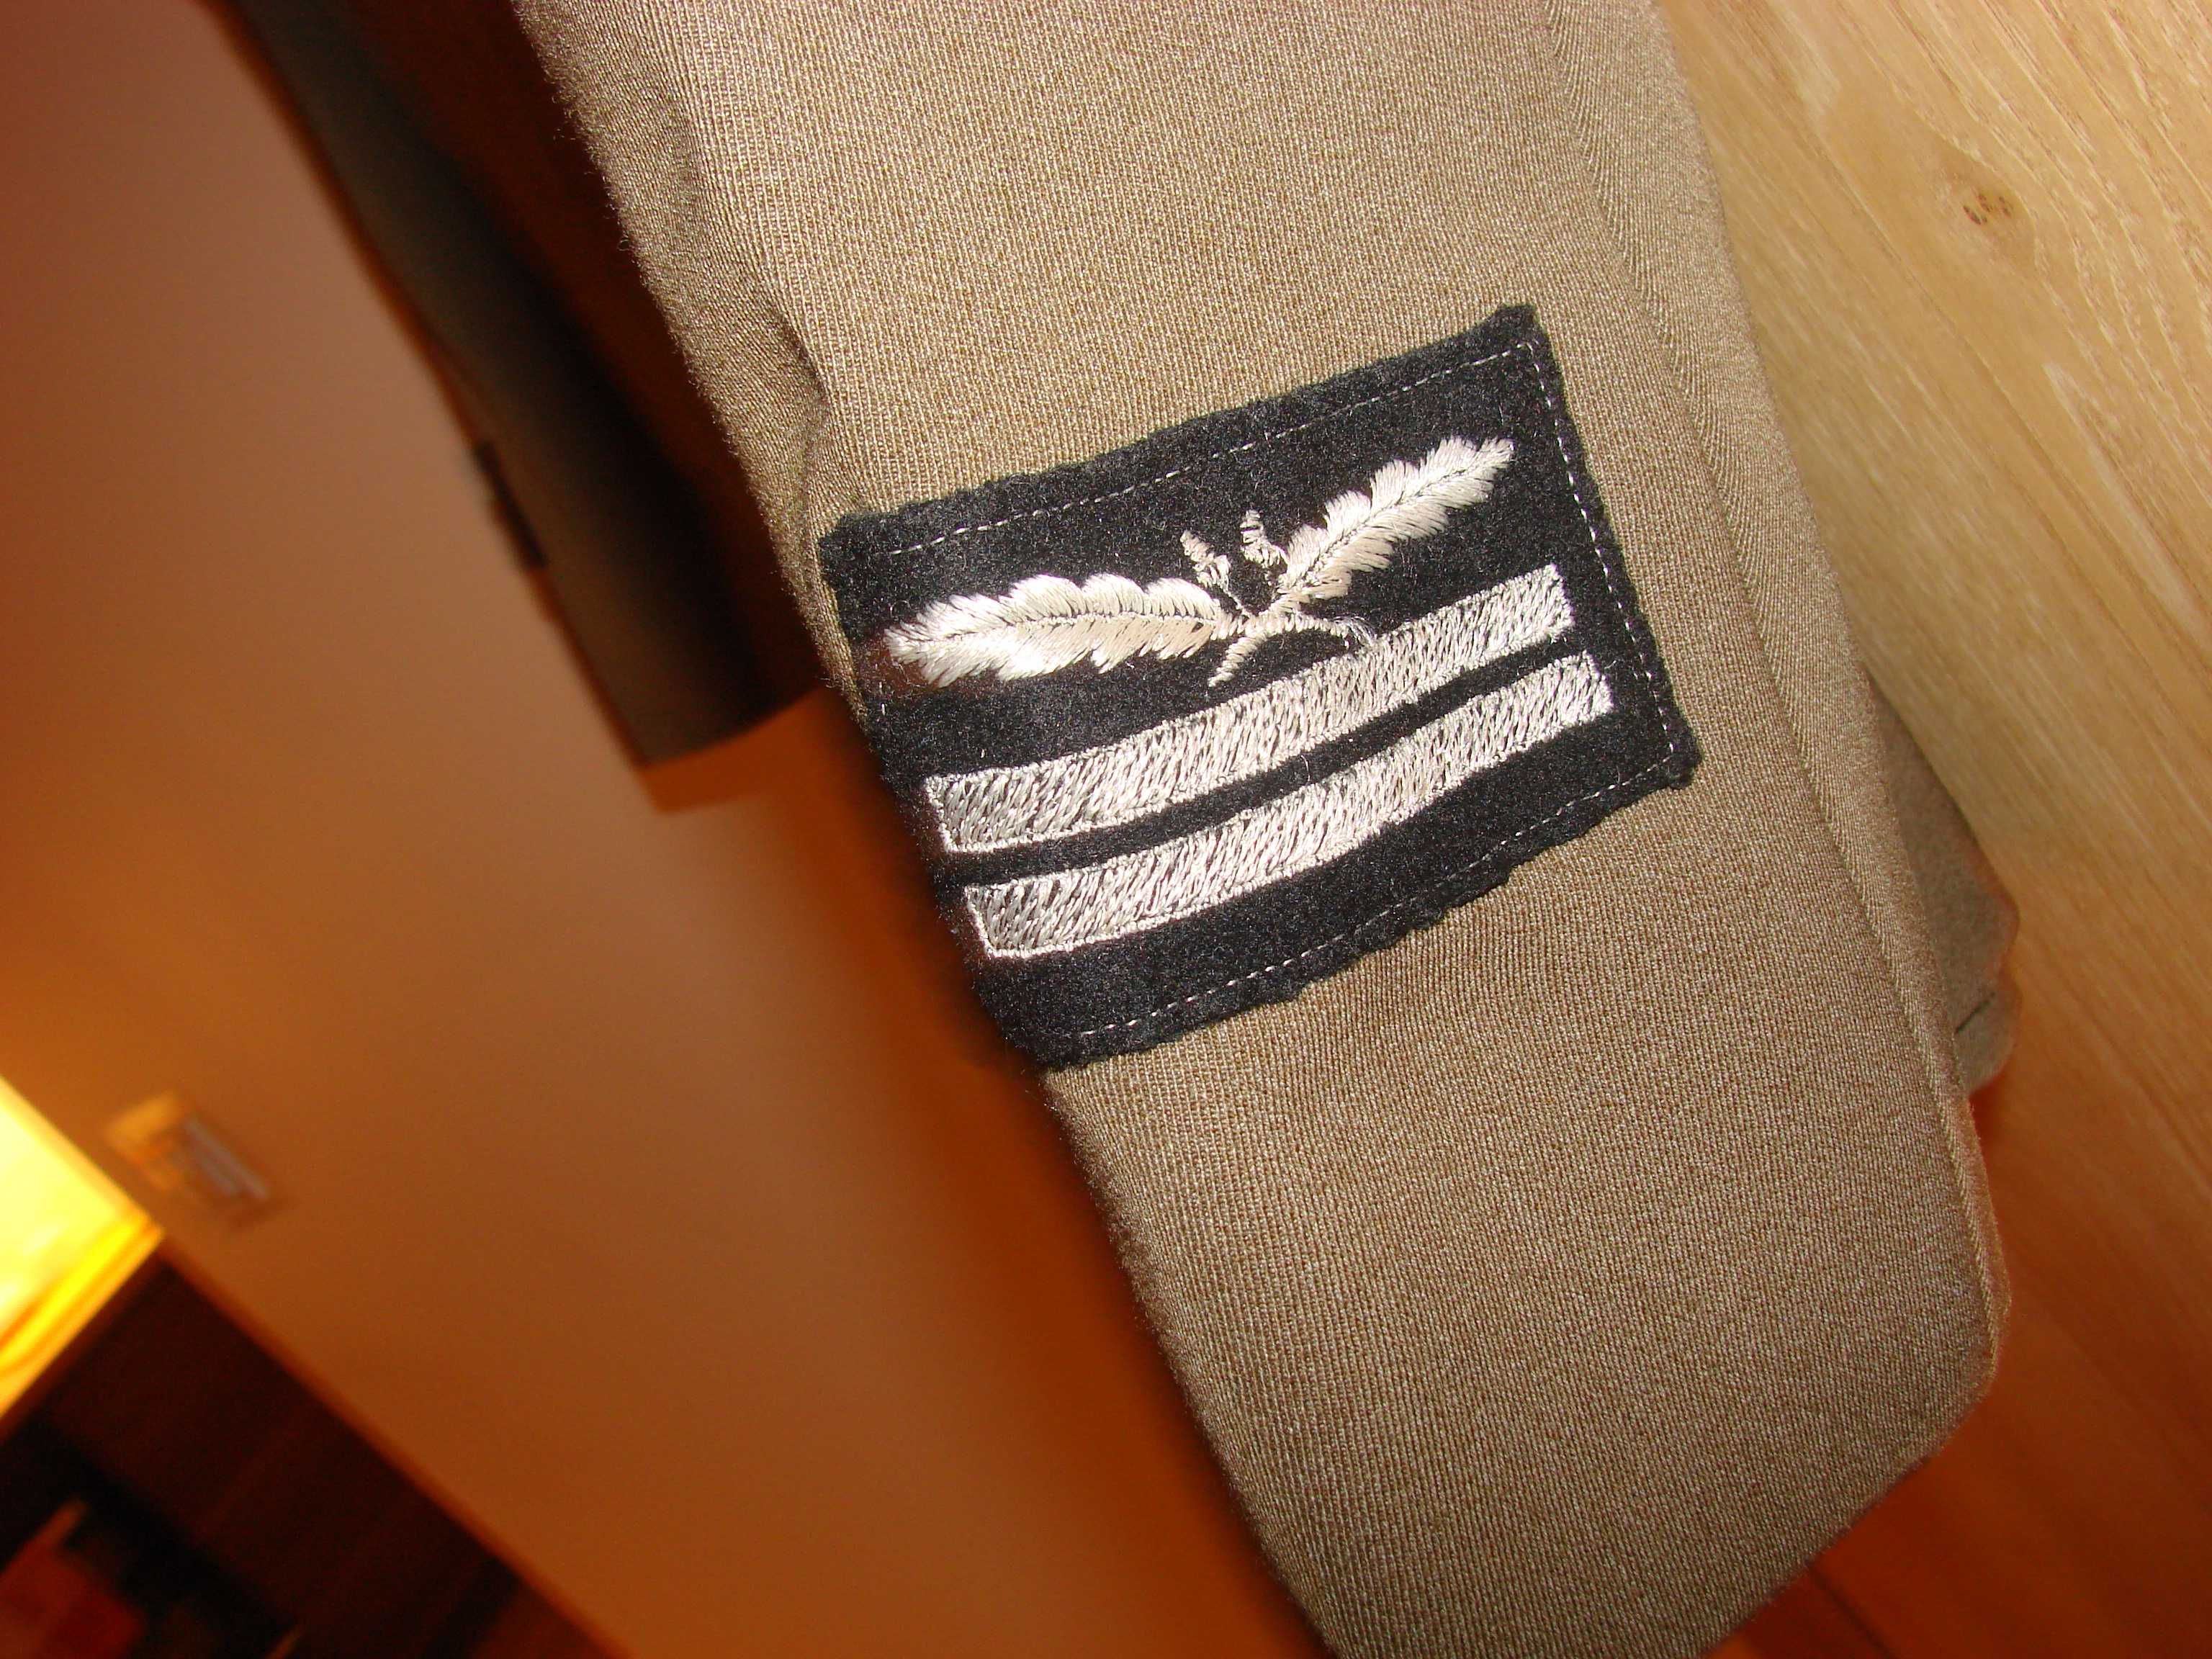 mundur wojskowy, marynarka